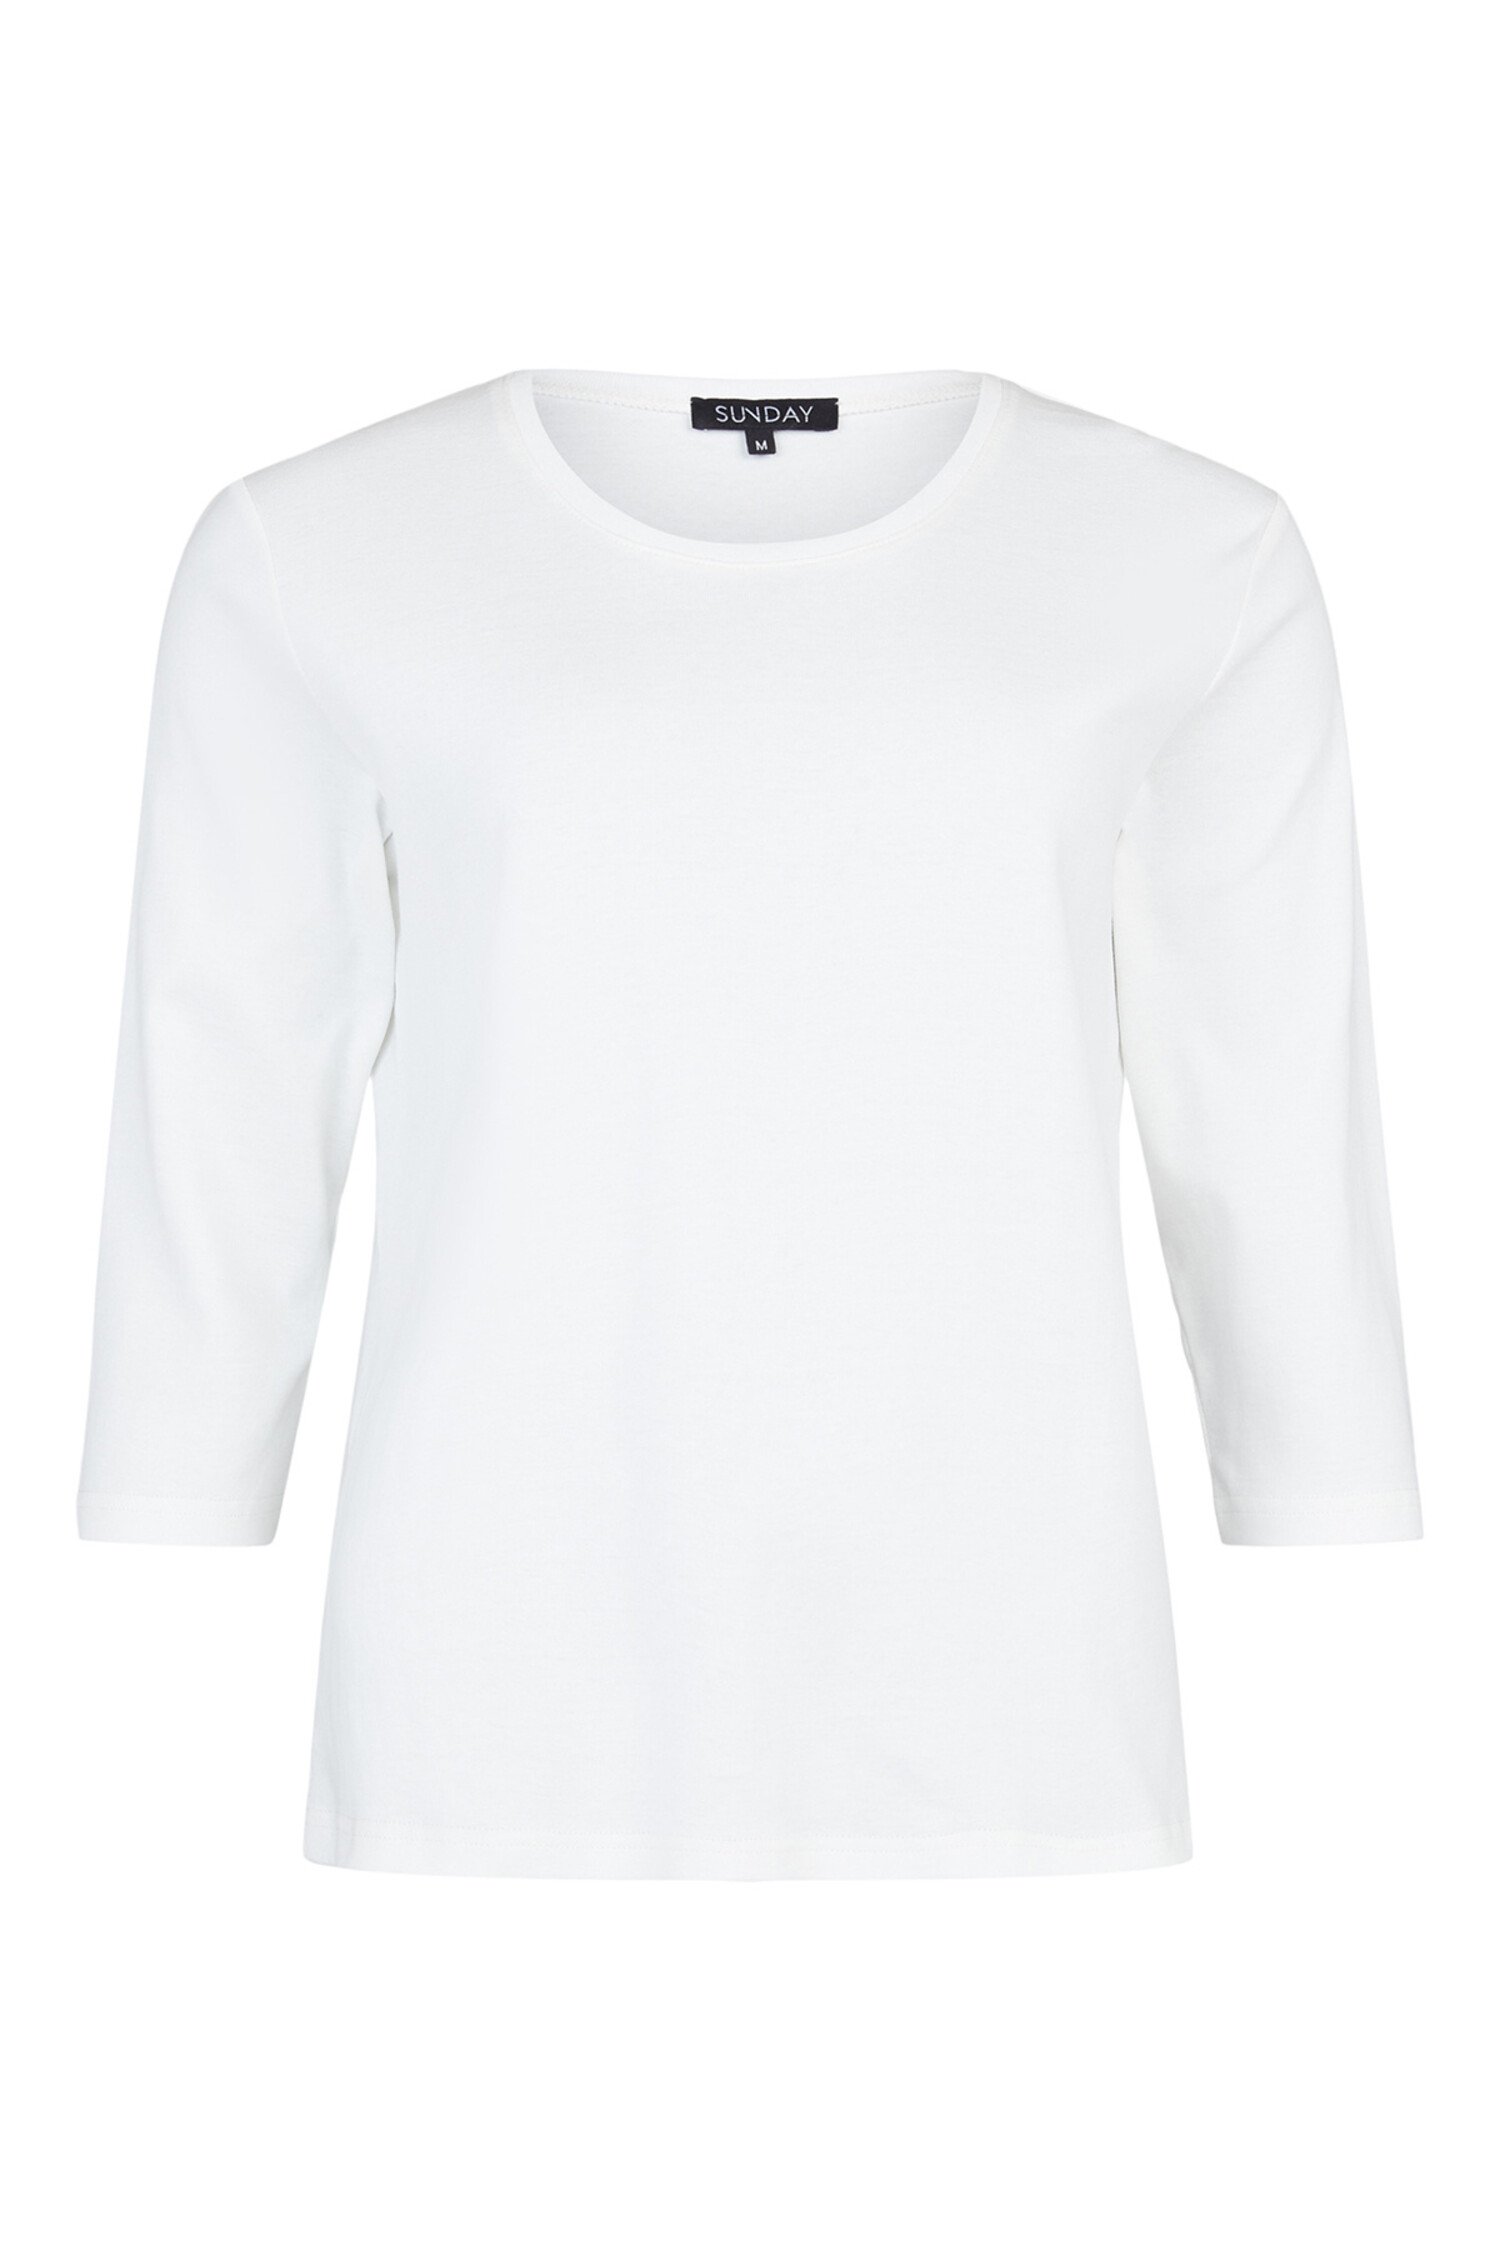 Women's Athletic Essential Slub 90s T-Shirt in Oatmeal Beige Marl